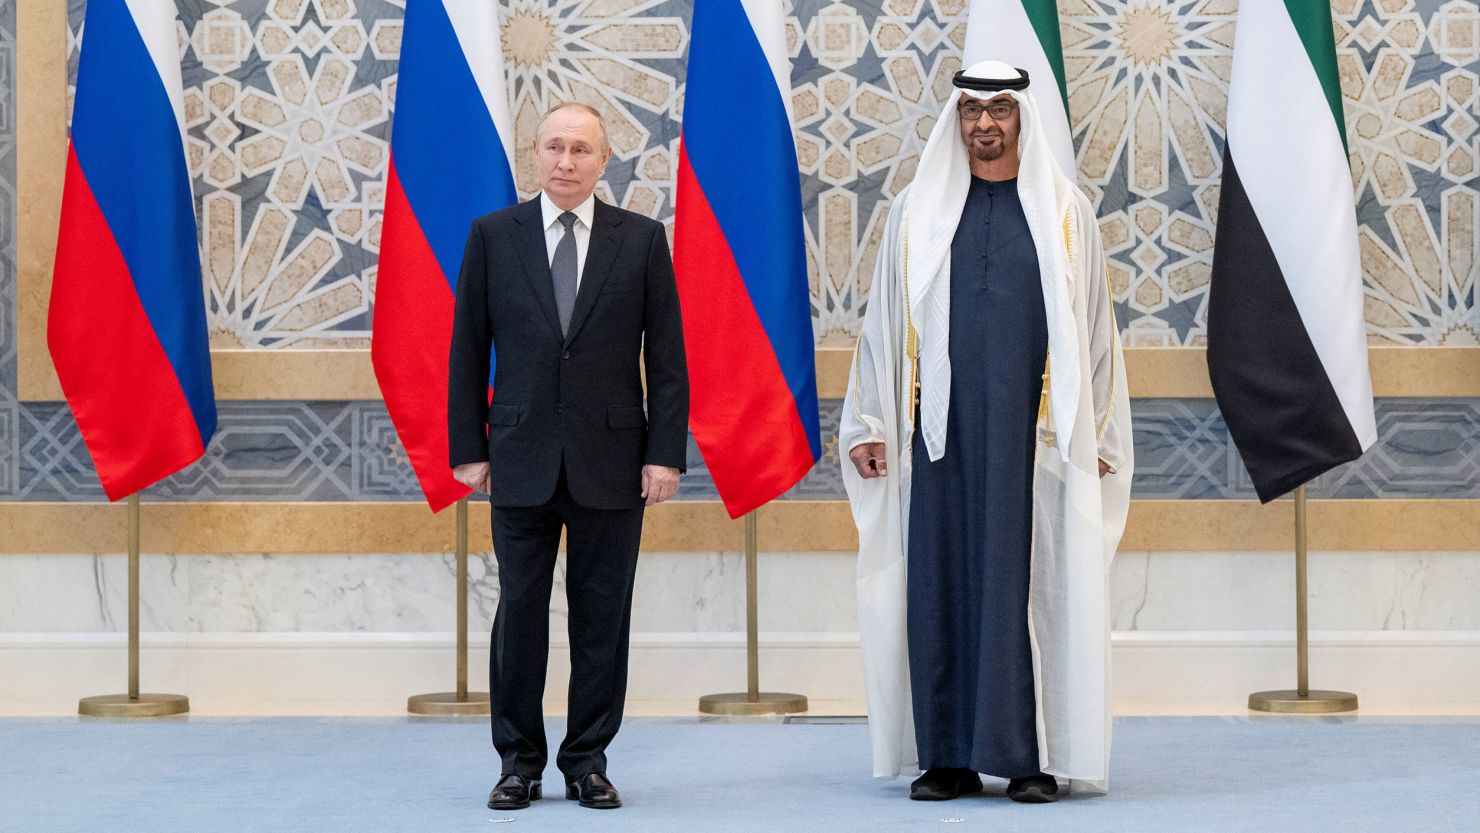 Putin makes rare foreign visit to UAE as Ukraine war grinds on | CNN